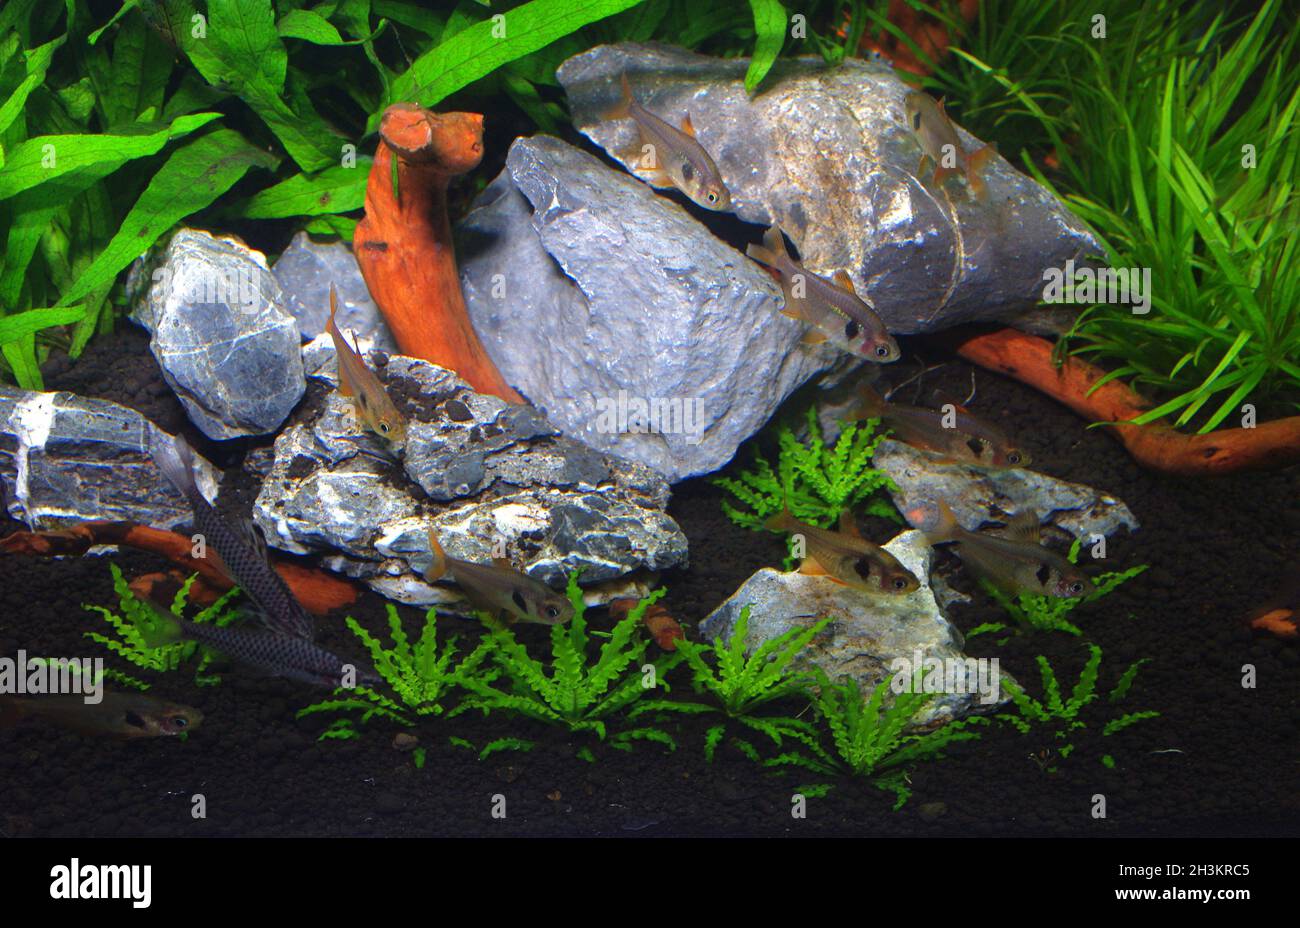 Aquarium with Spotted headstander (Chilodus punctatus) and Red phantom tetra (Hyphessobrycon sweglesi), planted with downoi plant (Pogostemon helferi) Stock Photo